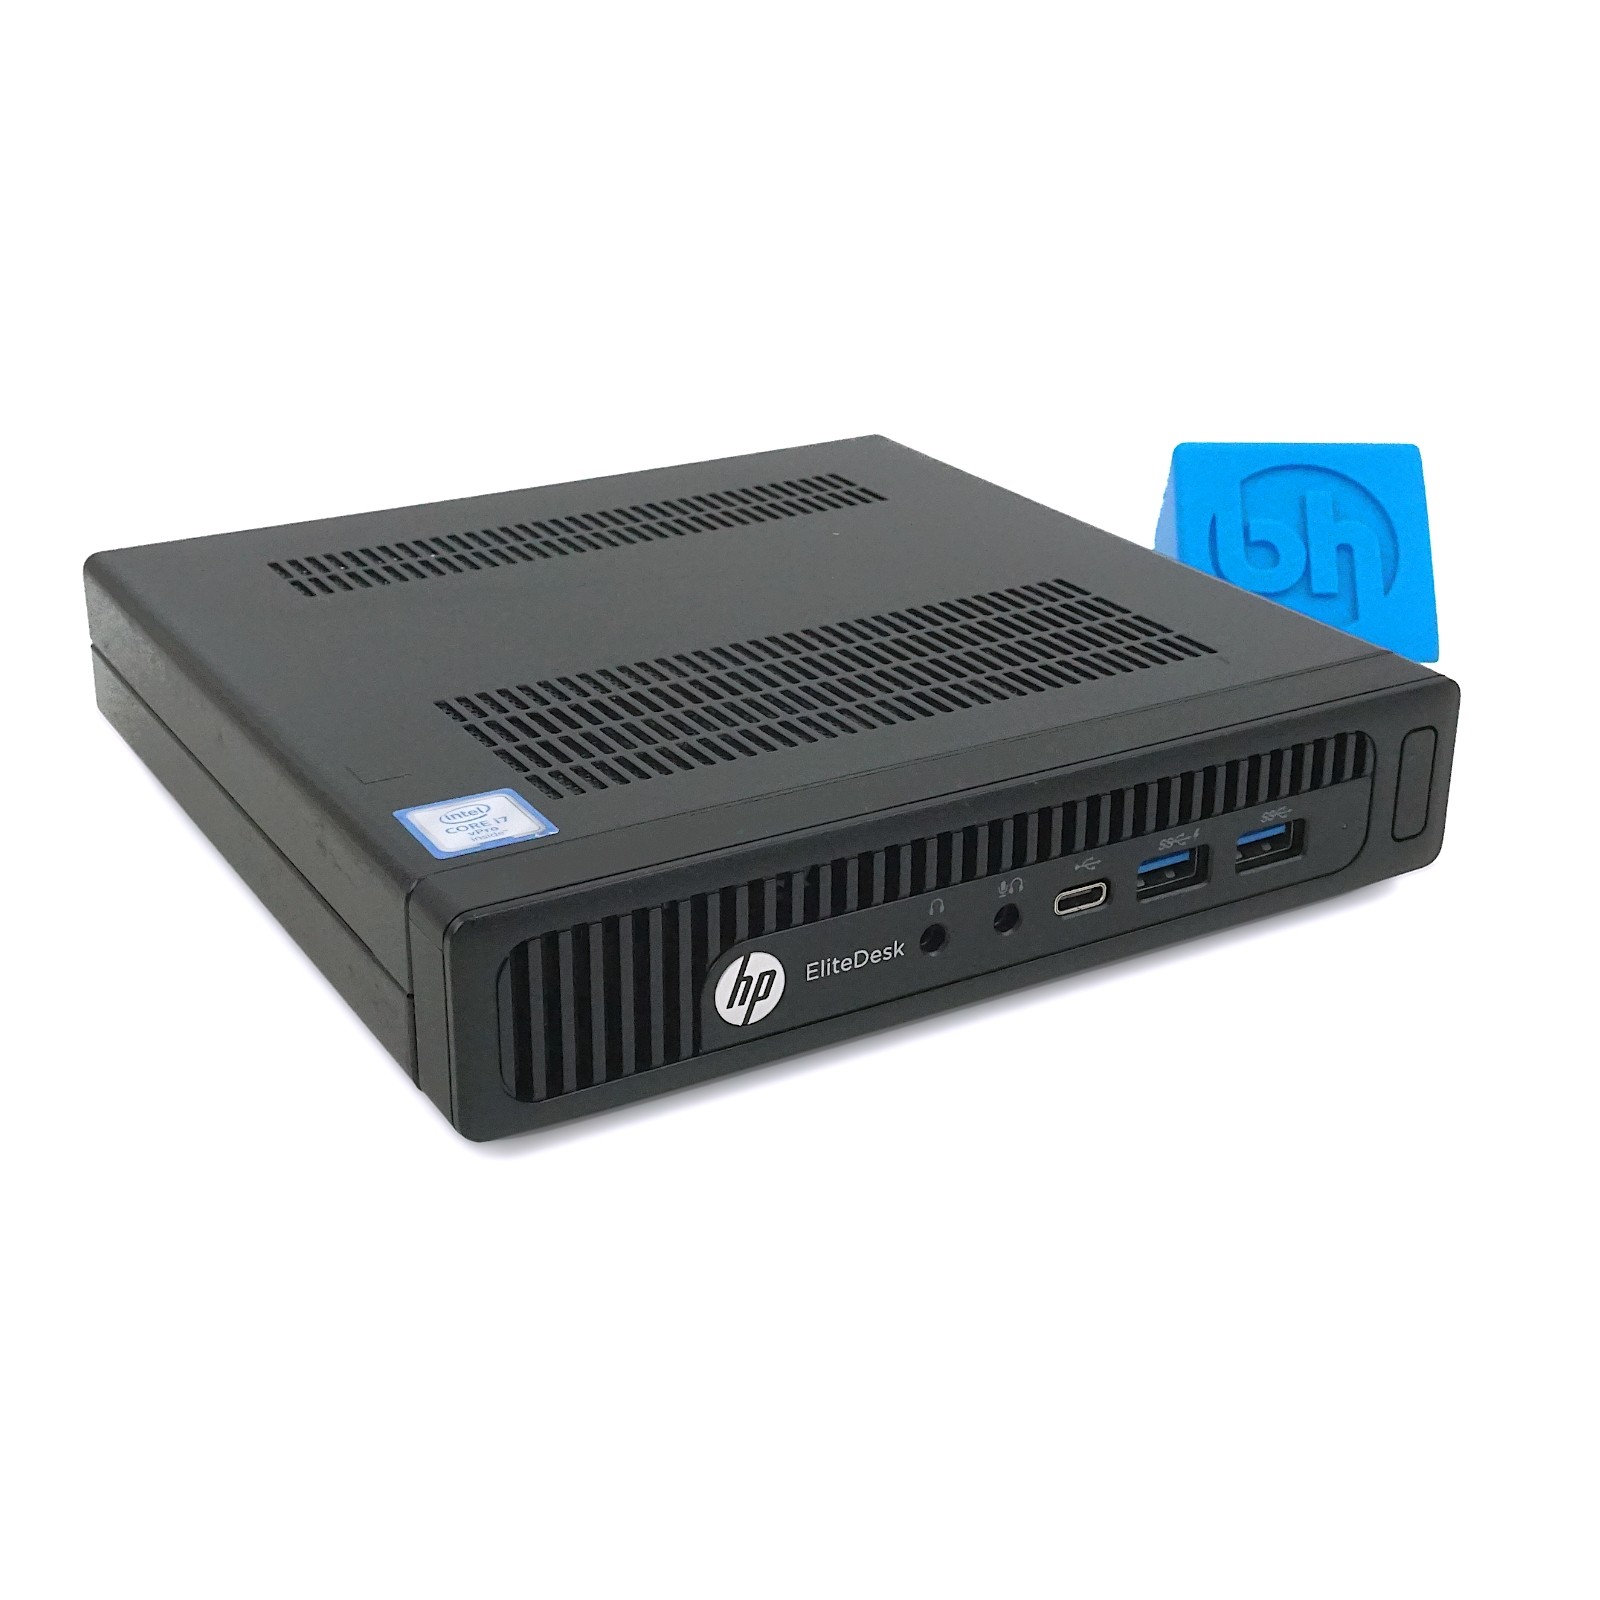 HP EliteDesk 800 G2 Mini Desktop PC | Pre-Configured Options